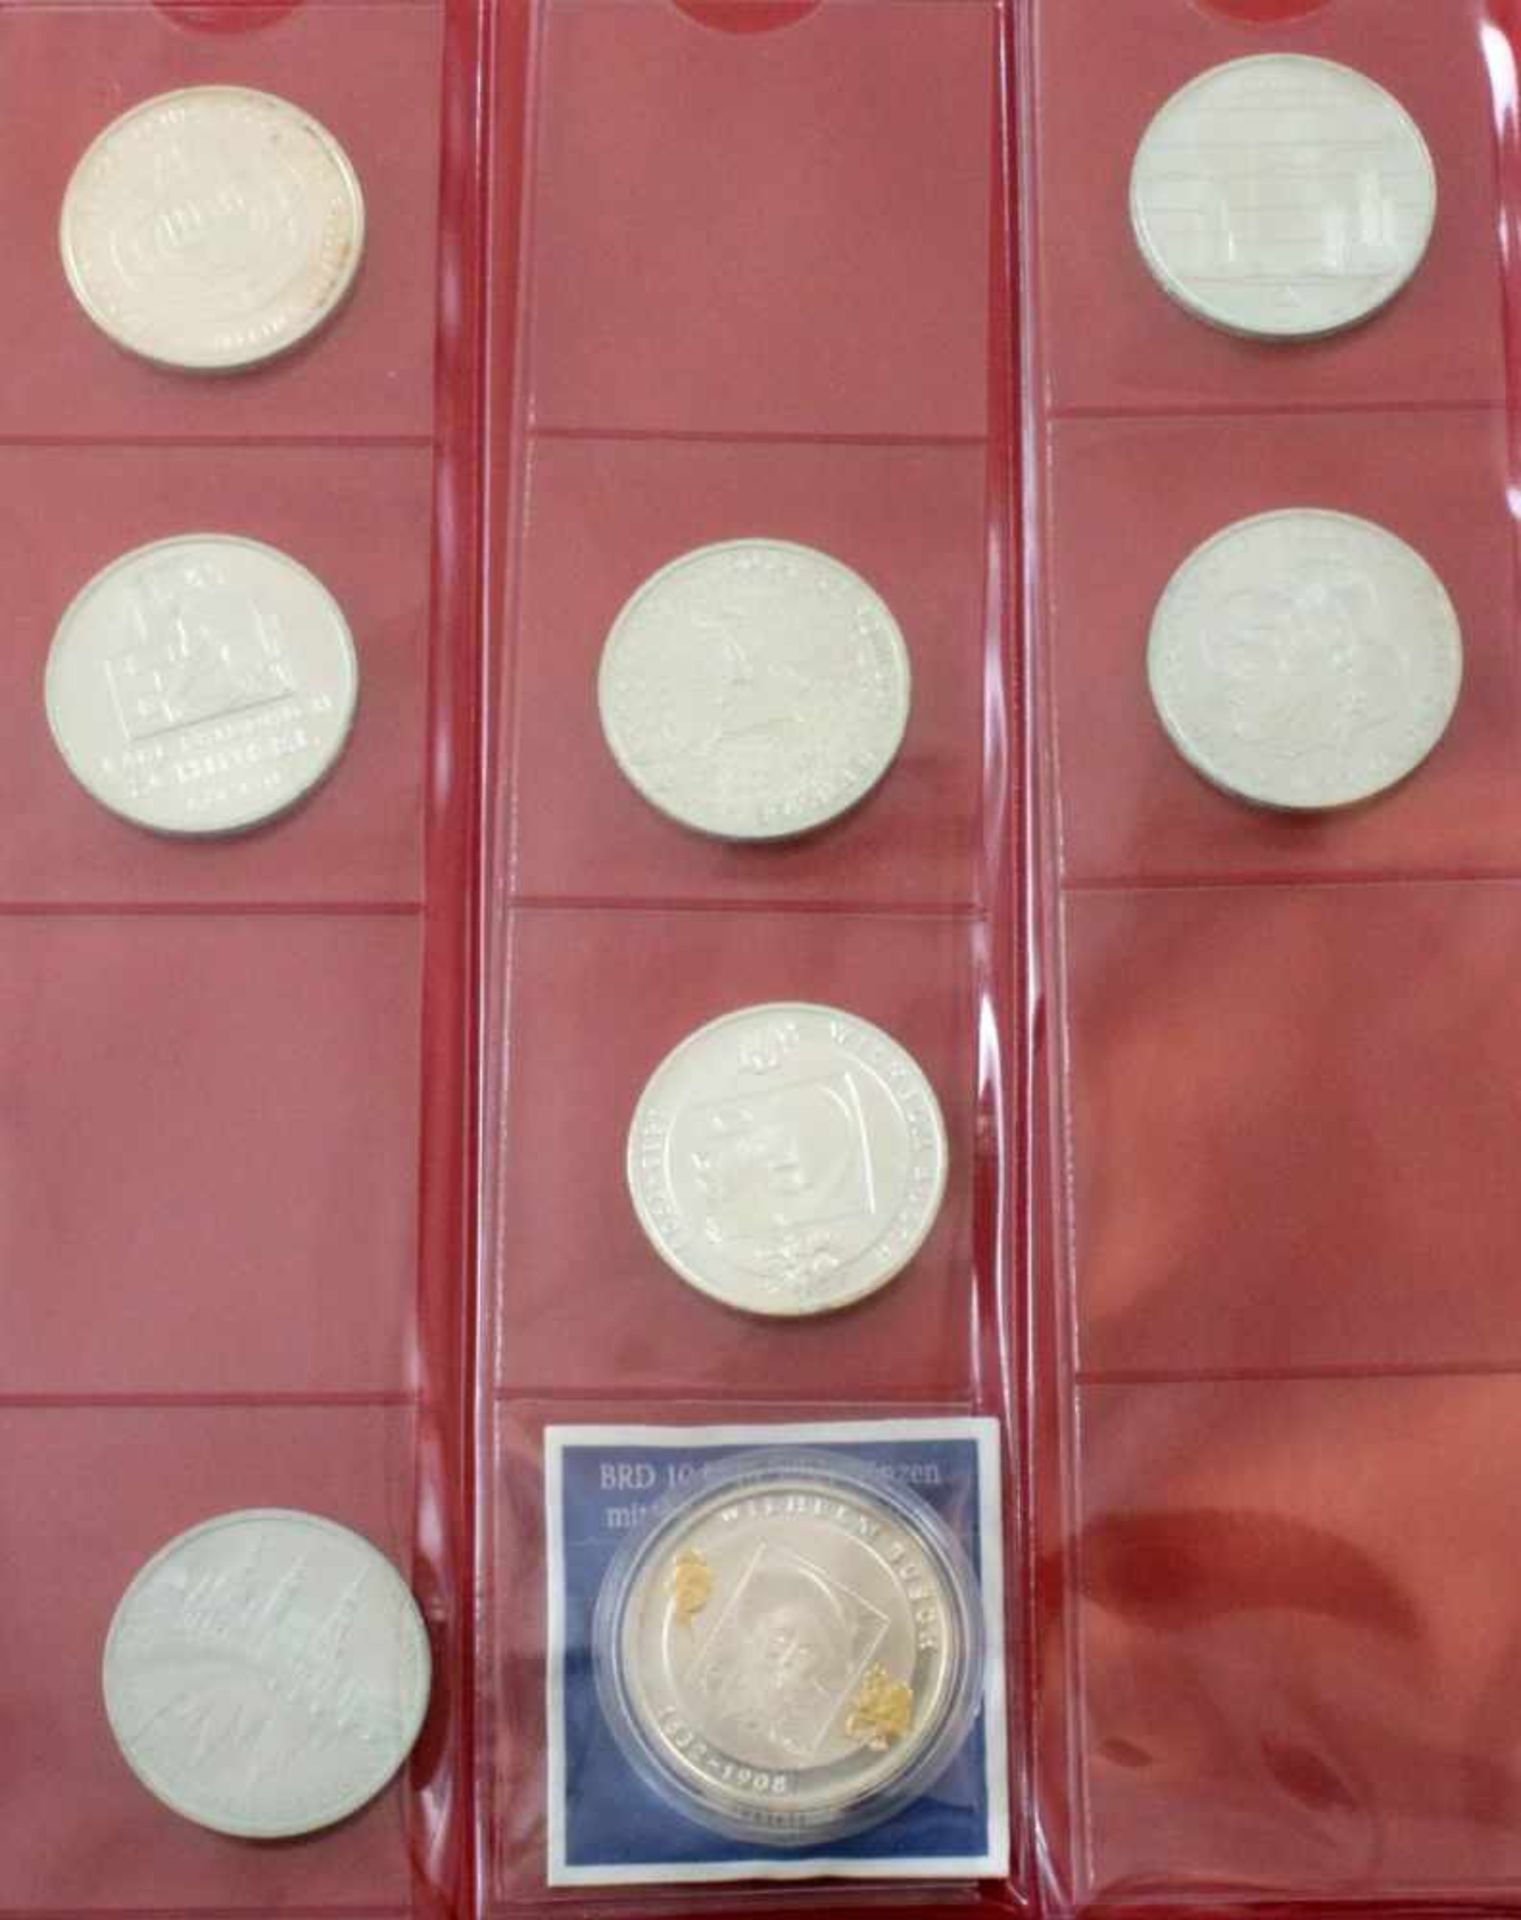 Sammlung 10  Münzen ab 2002 Sammelalbum mit 53 Münzen, alle unzirkuliert / Stempelglanz. - Bild 3 aus 4